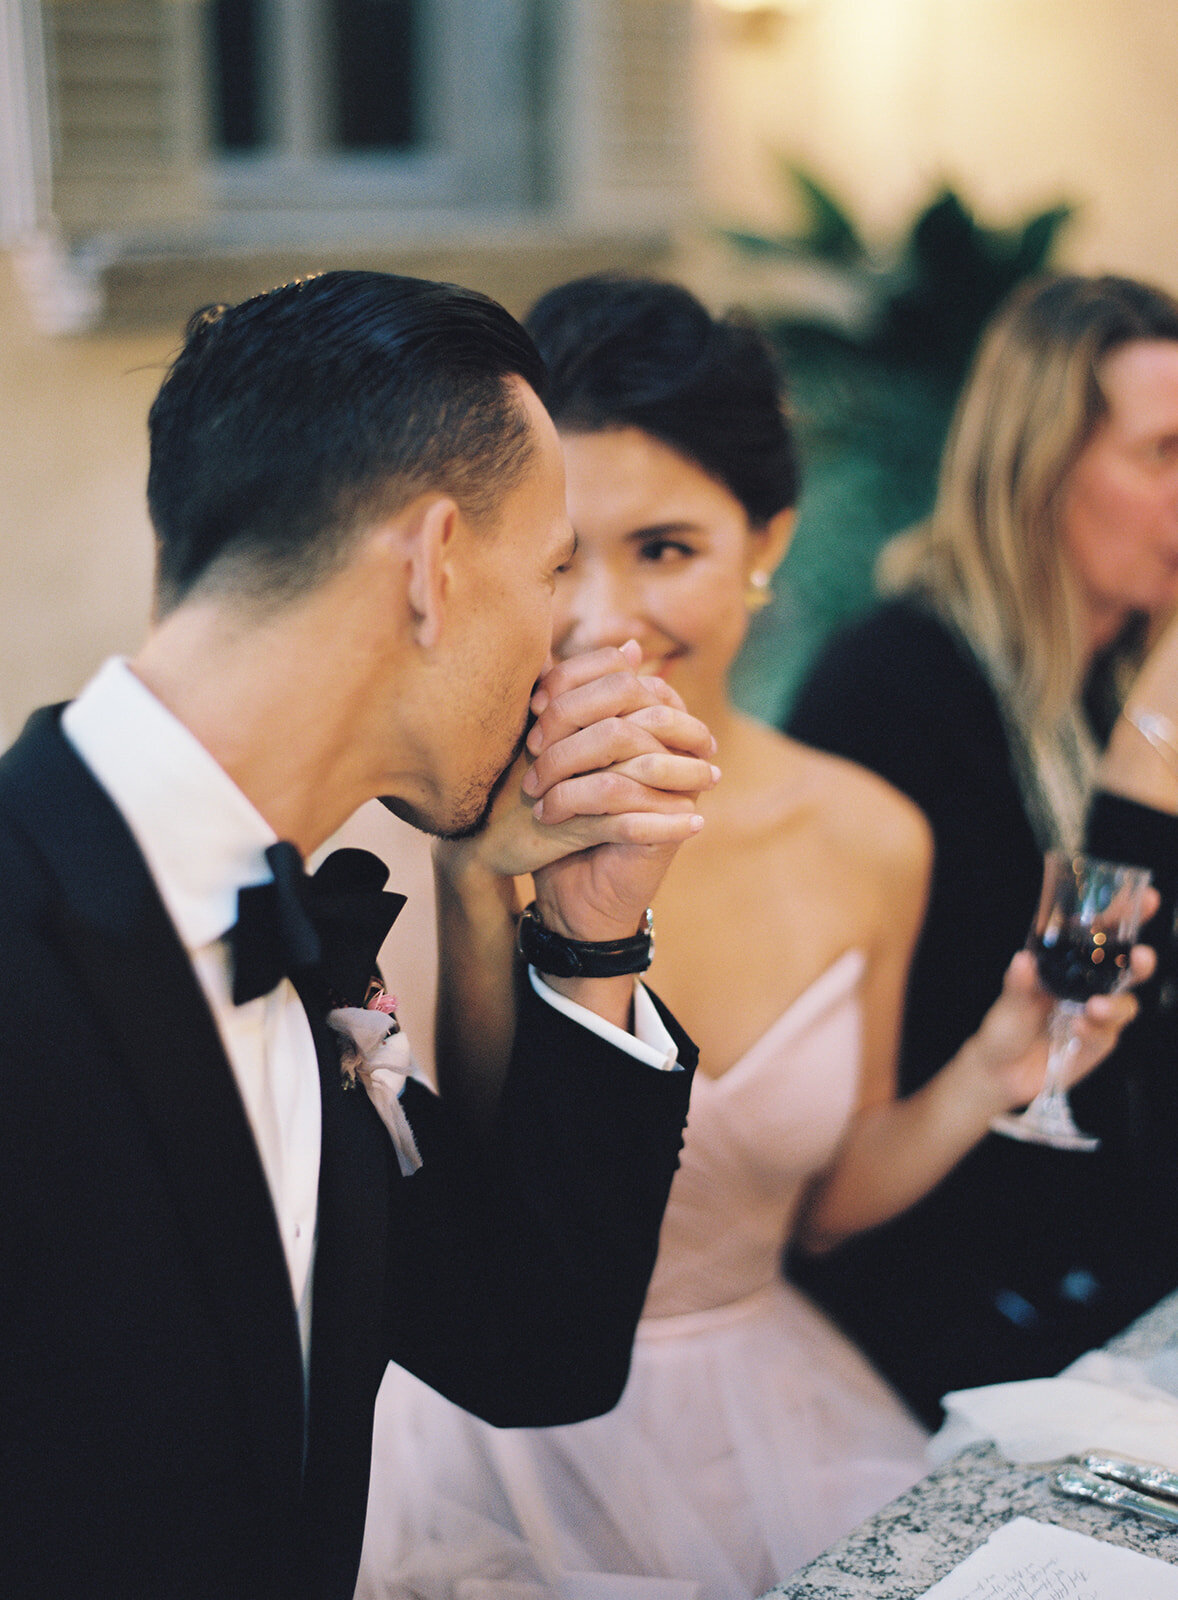 groom kisses bride's hand at reception